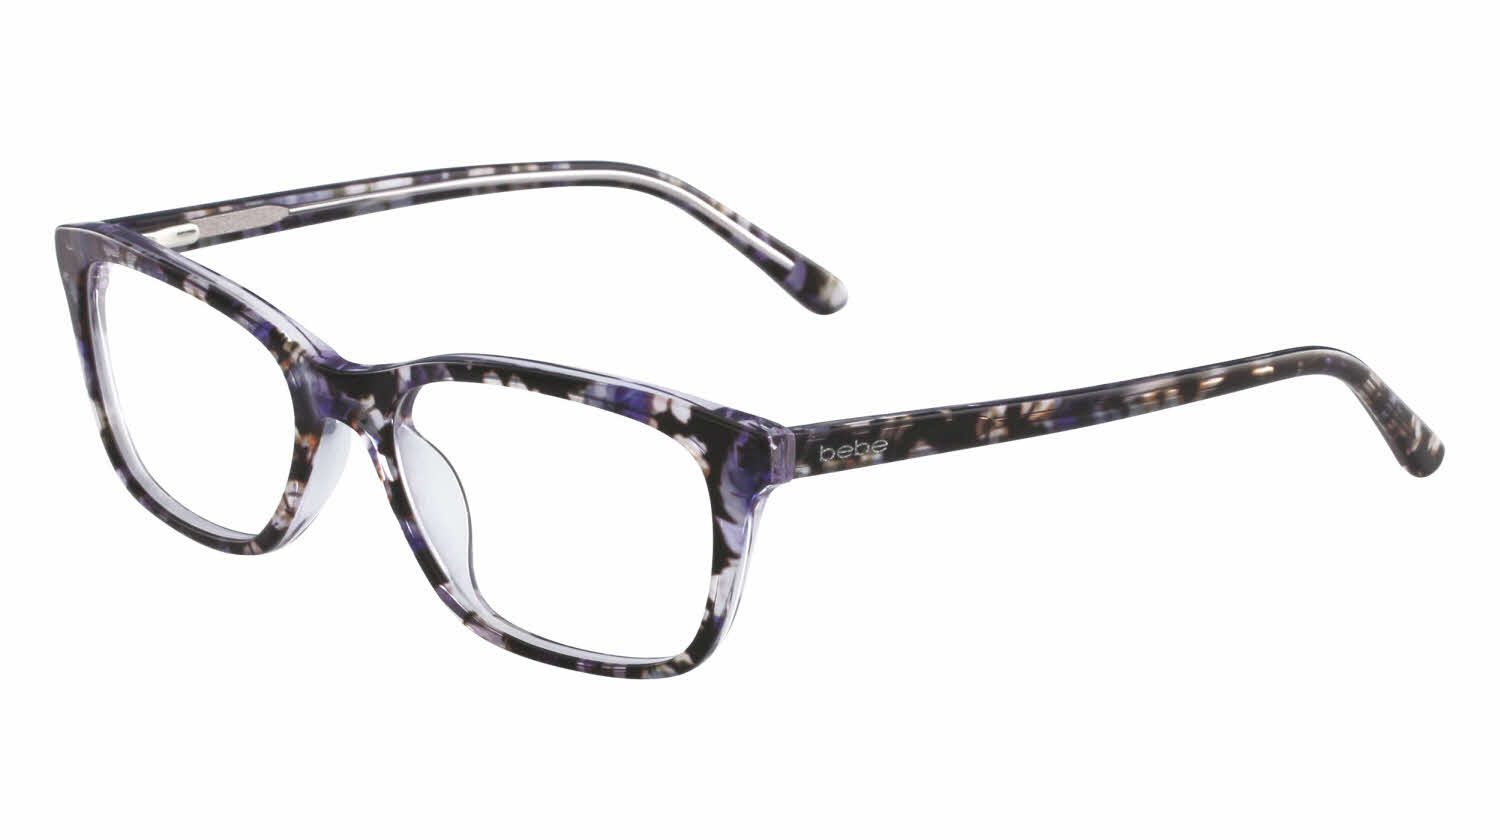 Bebe BB5145 Eyeglasses